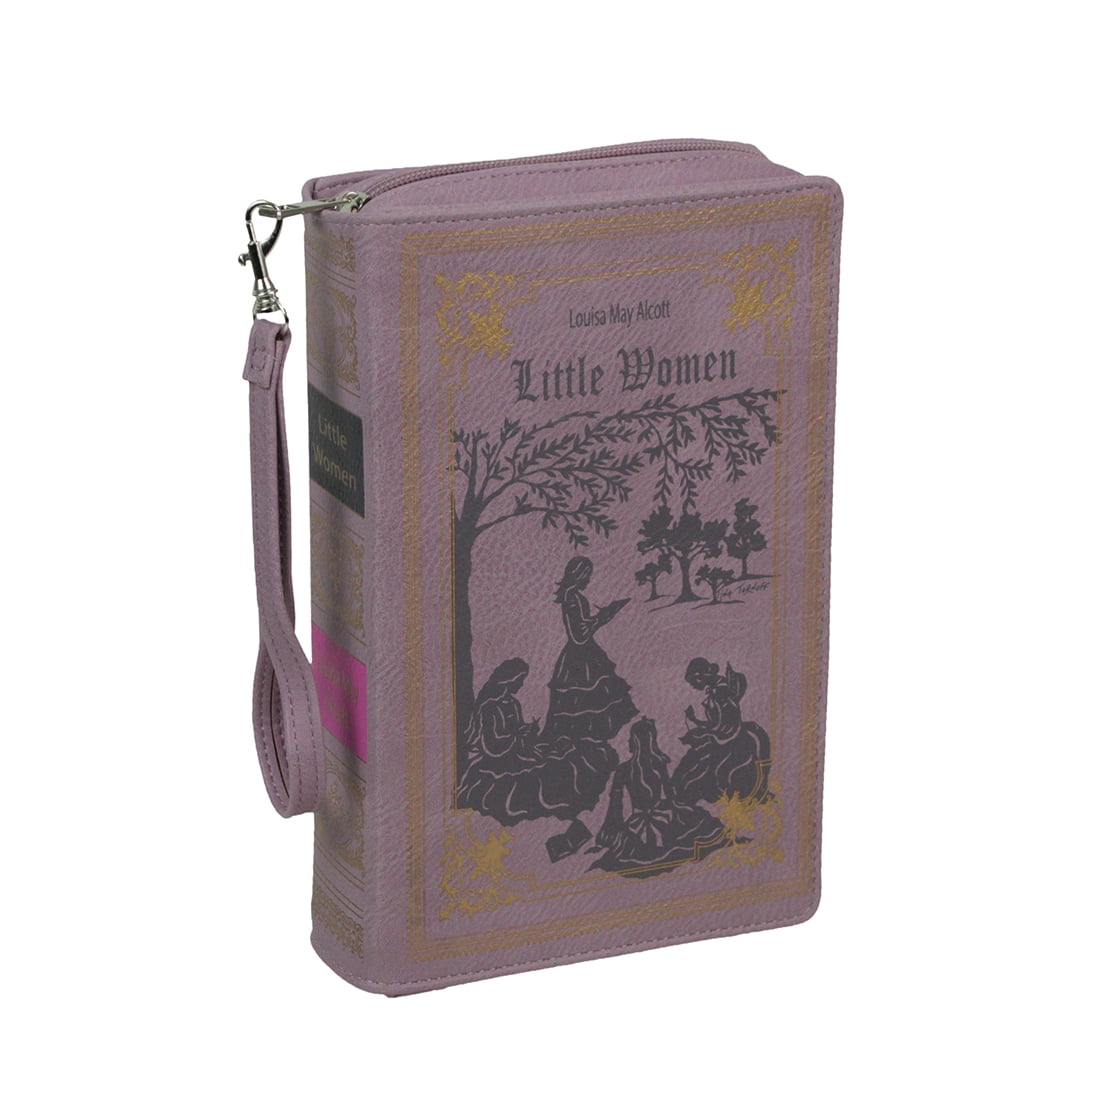 Things2Die4 Lavender Vinyl Little Women Book Handbag Shaped Novelty Clutch Purse Crossbody Bag 02323efe 23b6 44ce 9e48 5be9cc9db3b4.8d9420783614a9feda743ff8e96e5ace